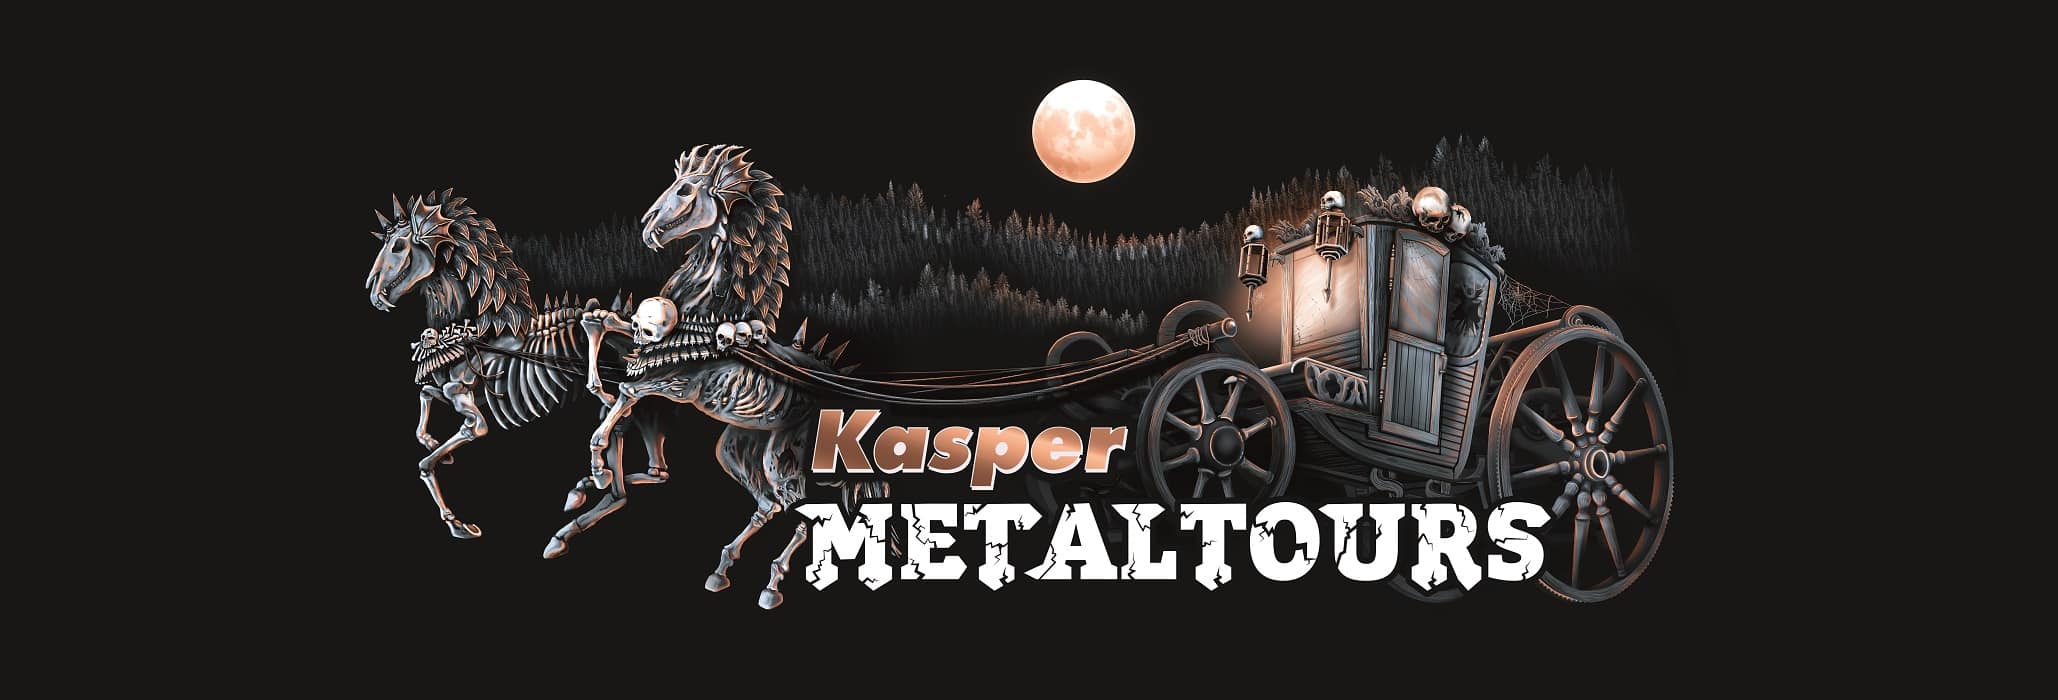 (c) Kasper-metaltours.de